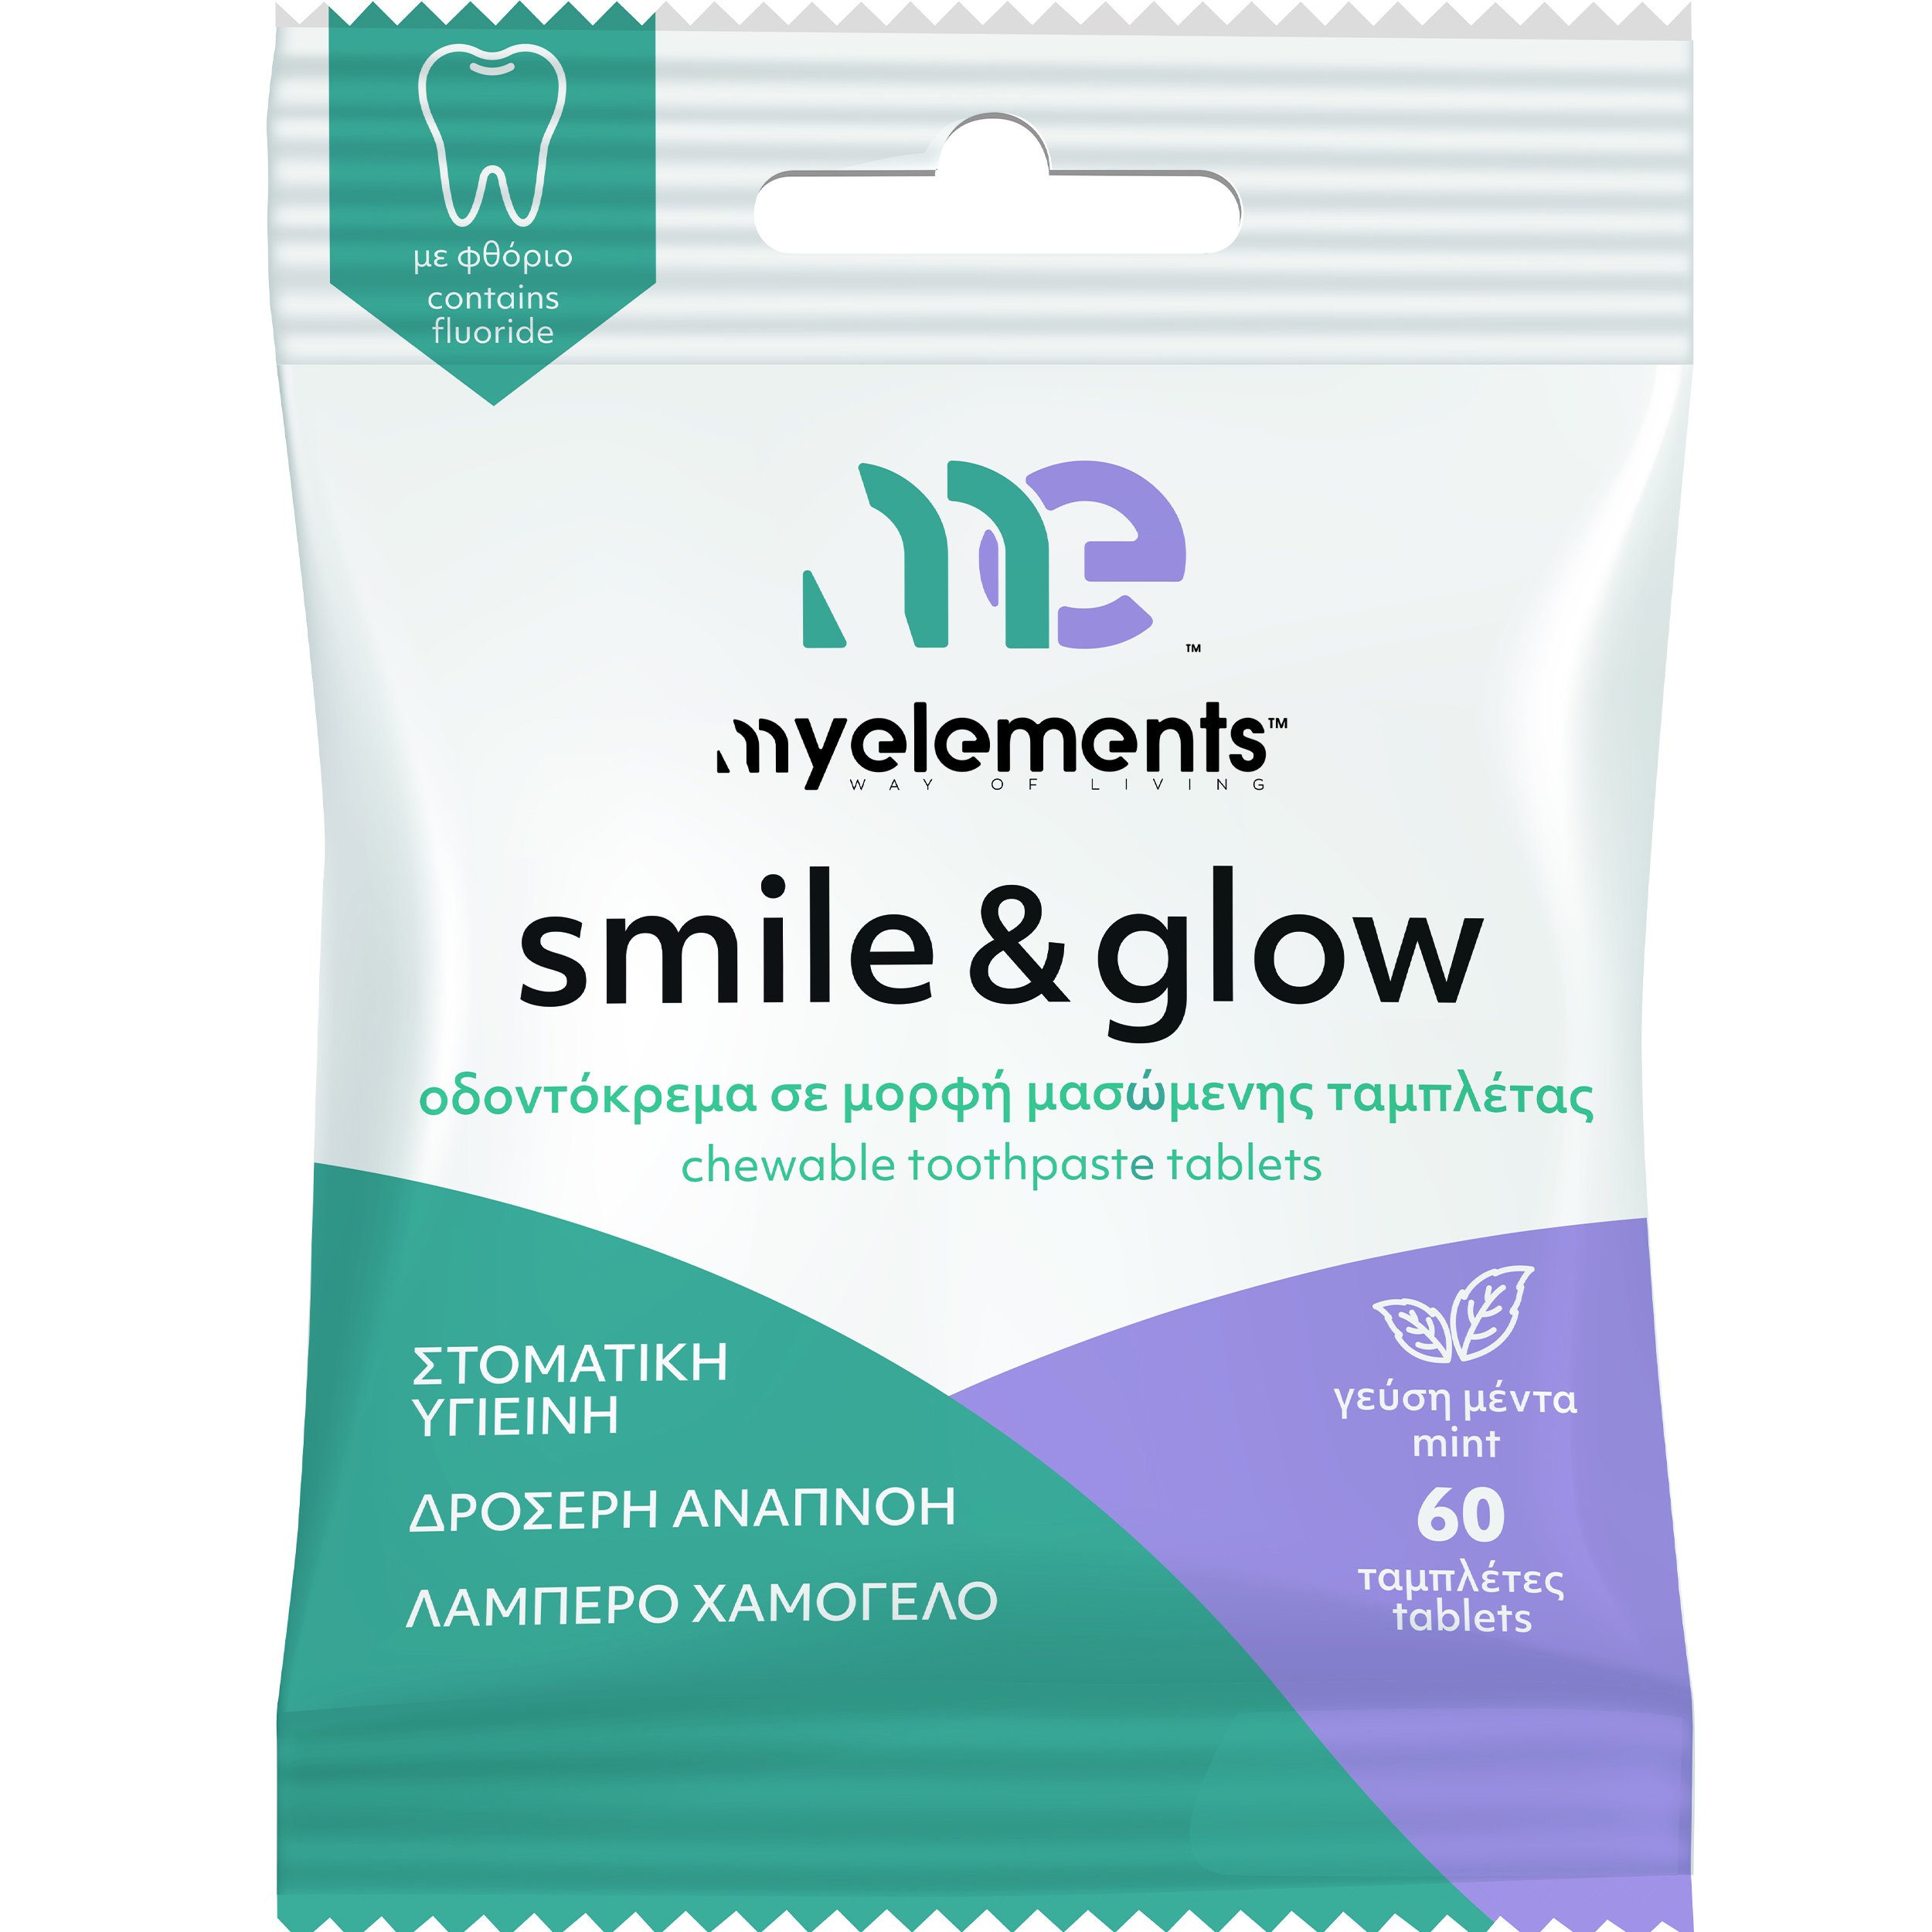 My Elements Smile & Glow Chewable Toothpaste Tablets 1450ppm Οδοντόκρεμα σε Μορφή Ταμπλέτας με Γεύση Μέντα 60 Chew.tabs 58065